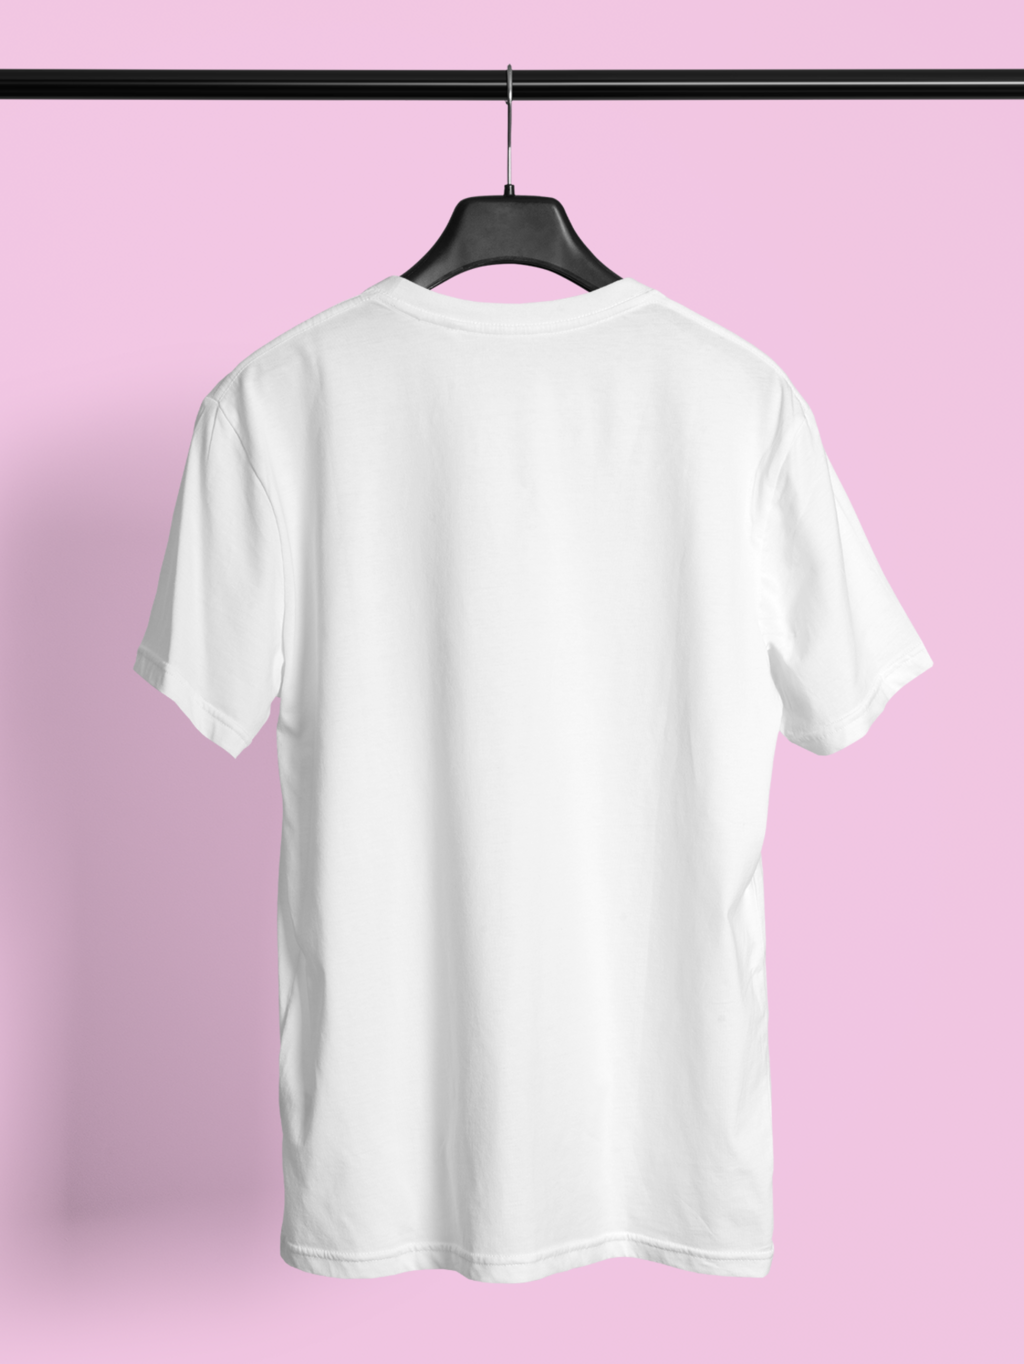 Camiseta T-Shirt Emperrado (Branco)